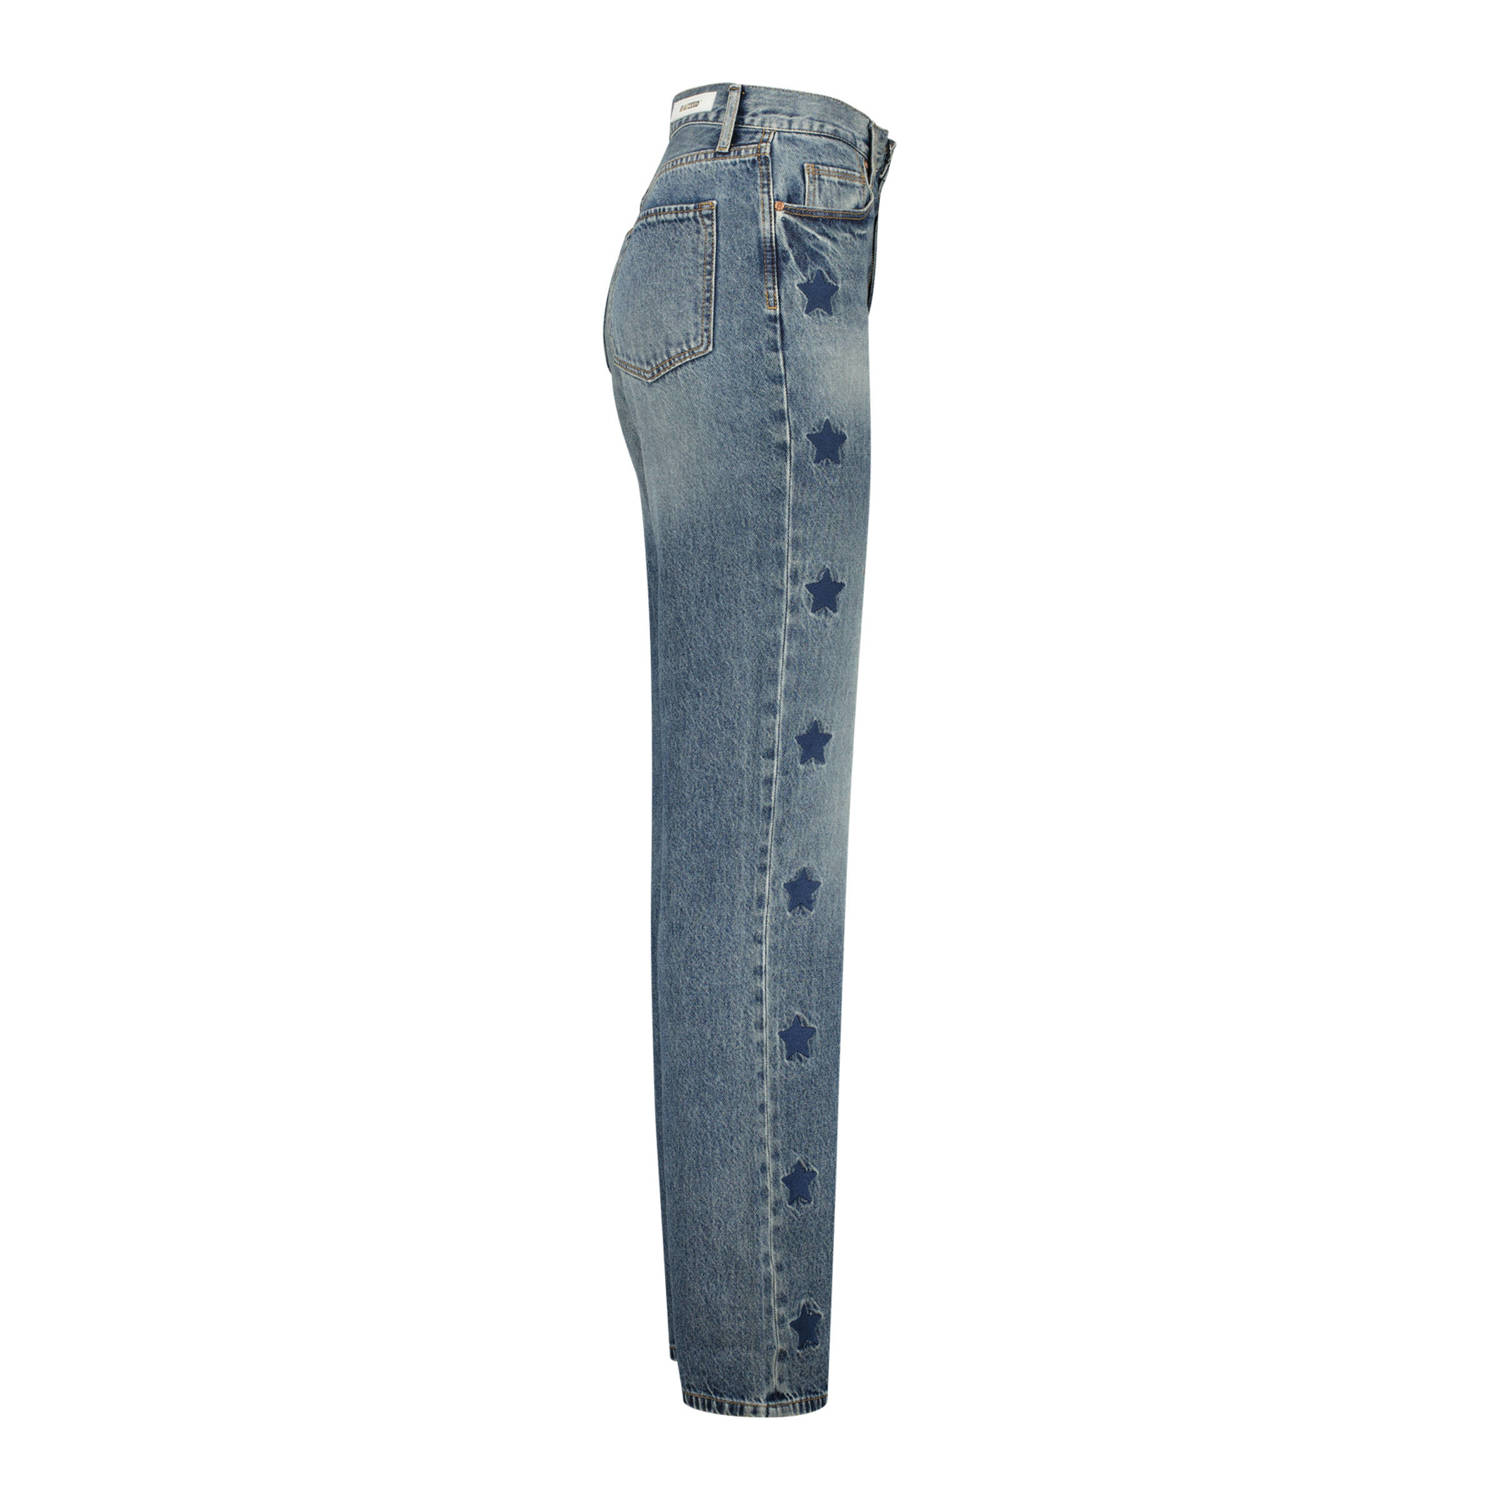 Raizzed straight jeans dark blue denim